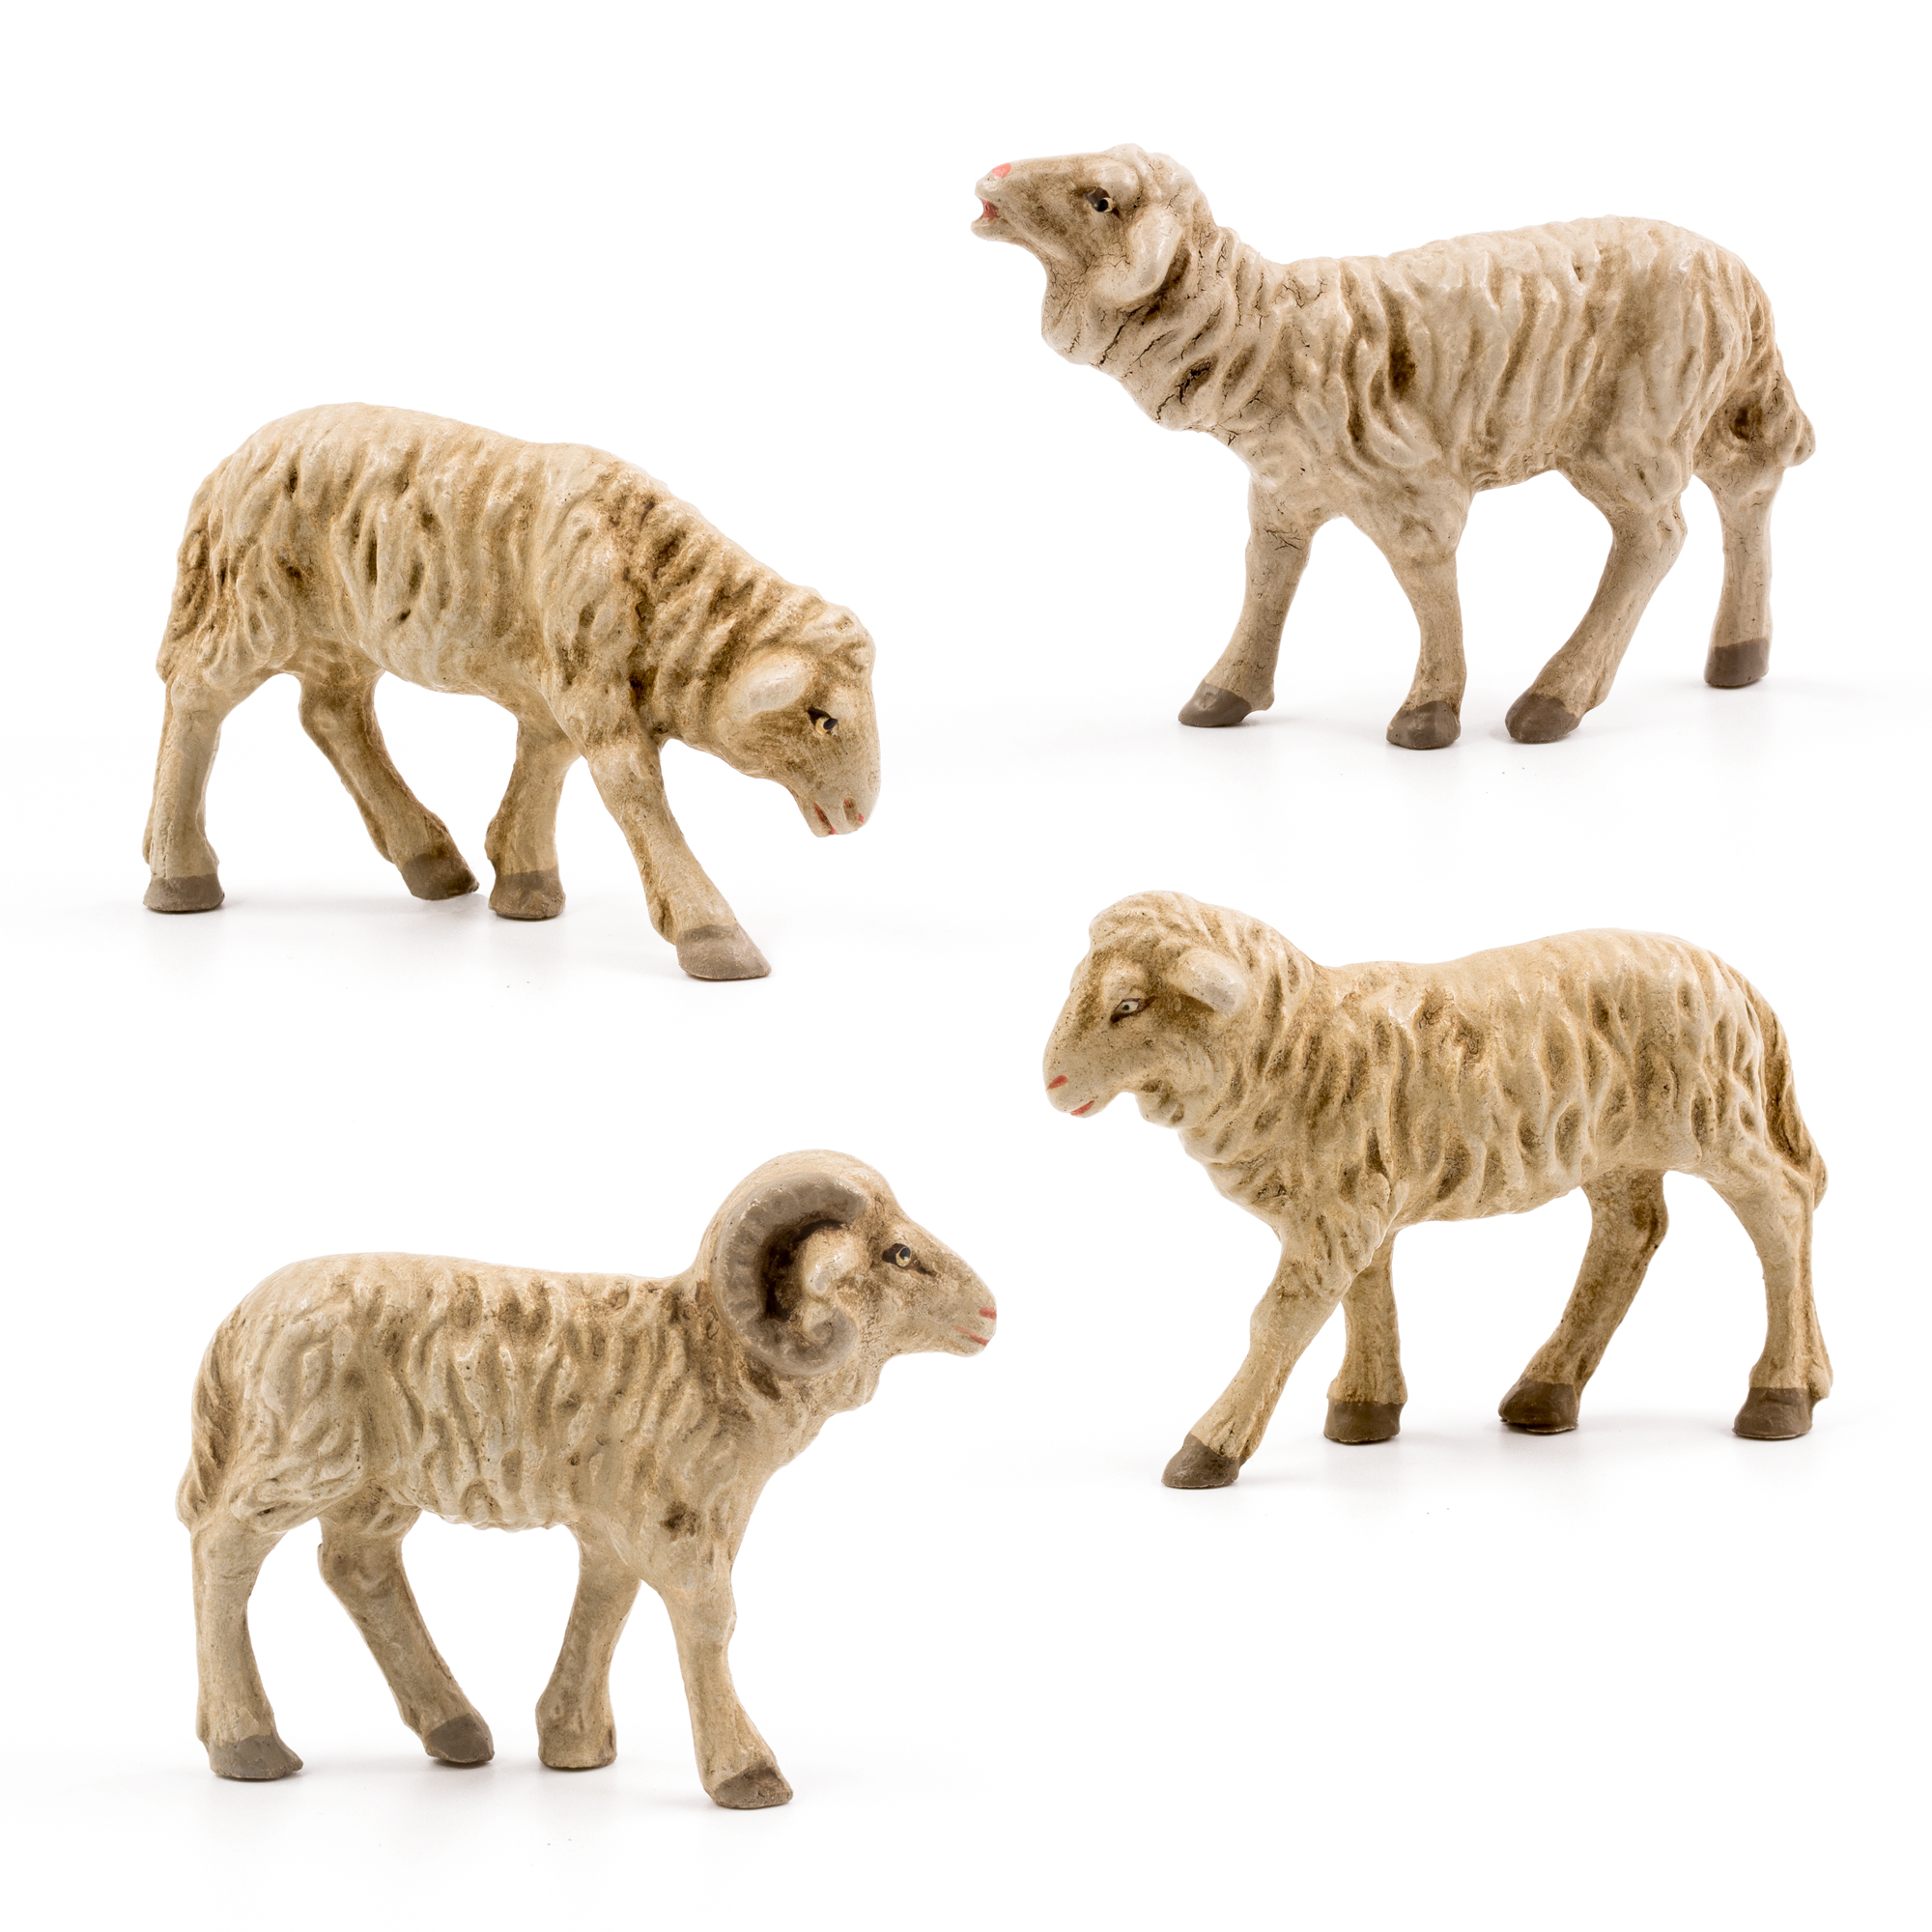 Schafgruppe, 4 Teile, zu 9 - 10cm Figuren